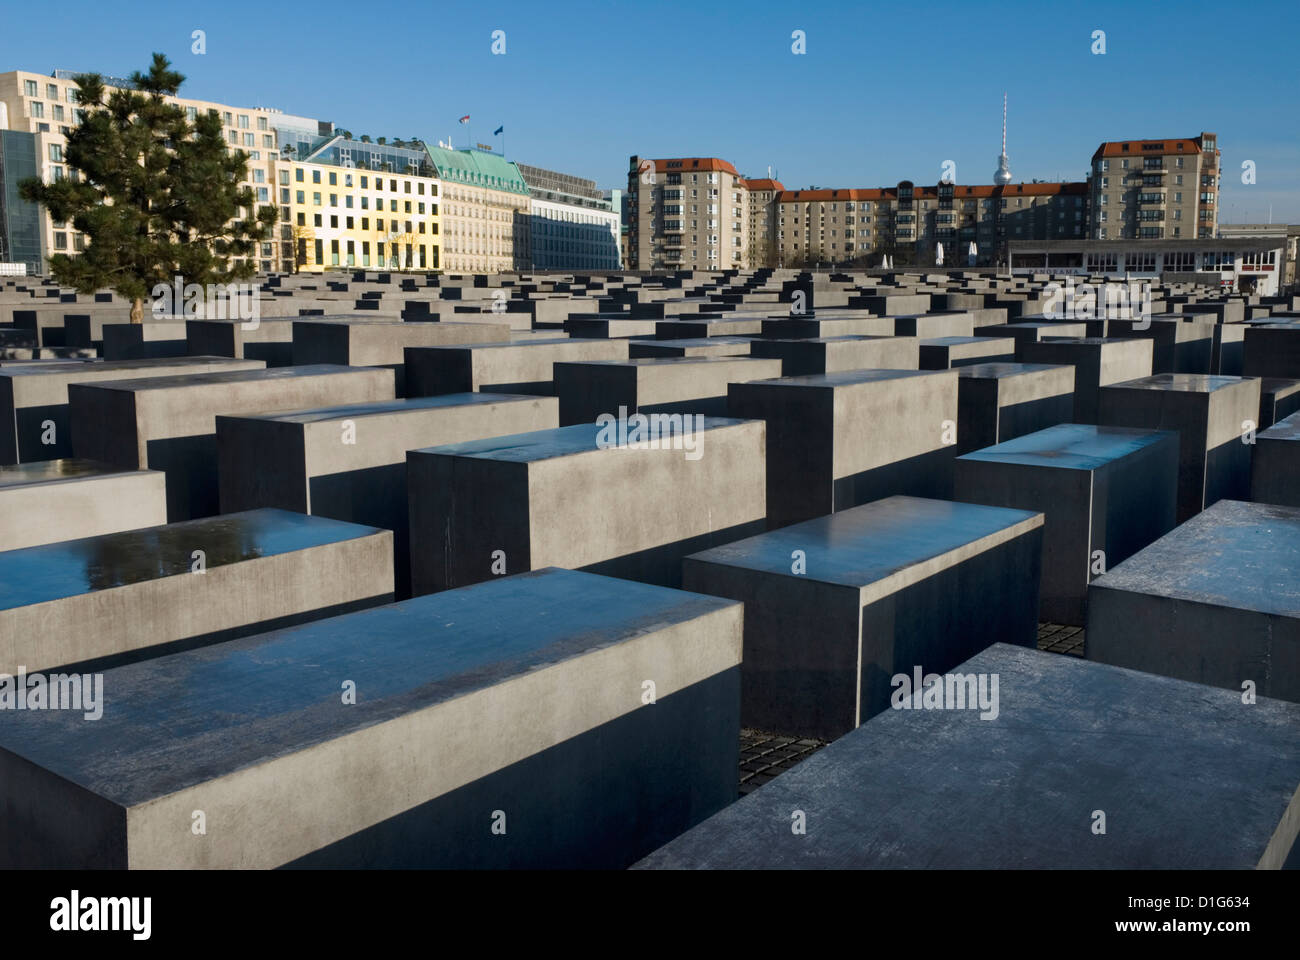 Denkmal fur die ermordeten Juden Europas (Monument to the murdered Jews of Europe) (Holocaust Memorial), Berlin, Germany, Europe Stock Photo